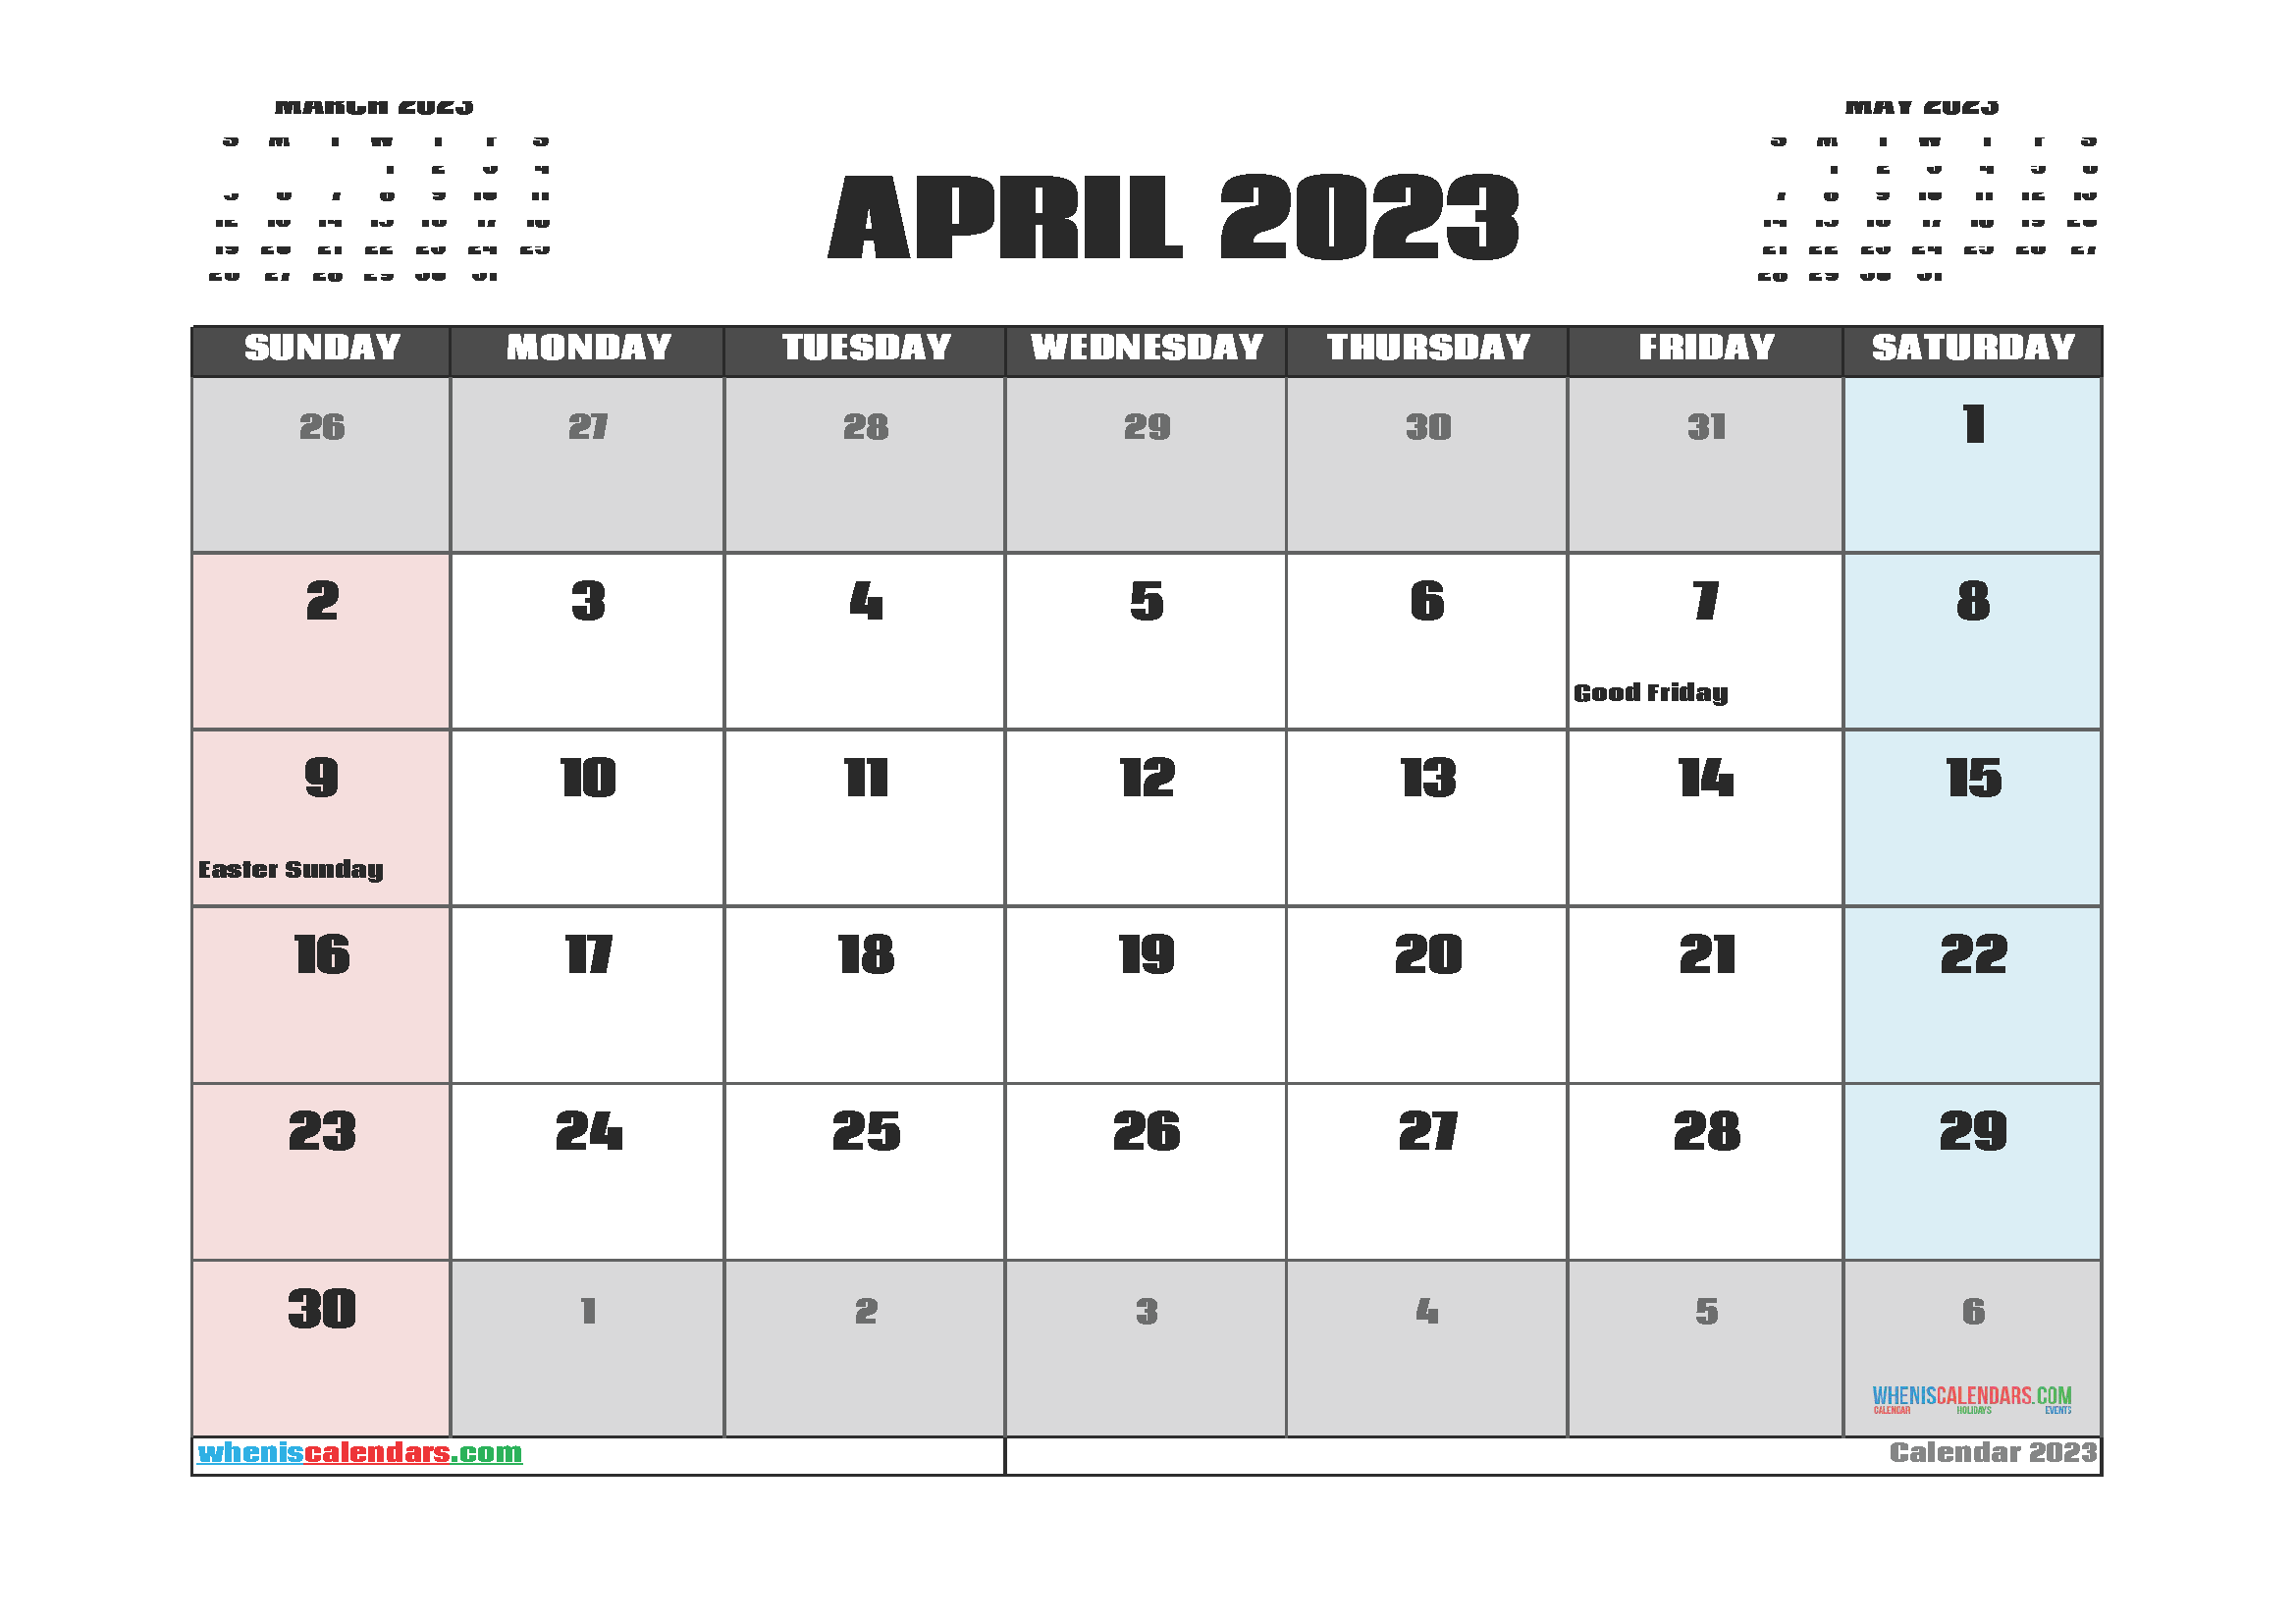 Free Printable April 2023 Calendar